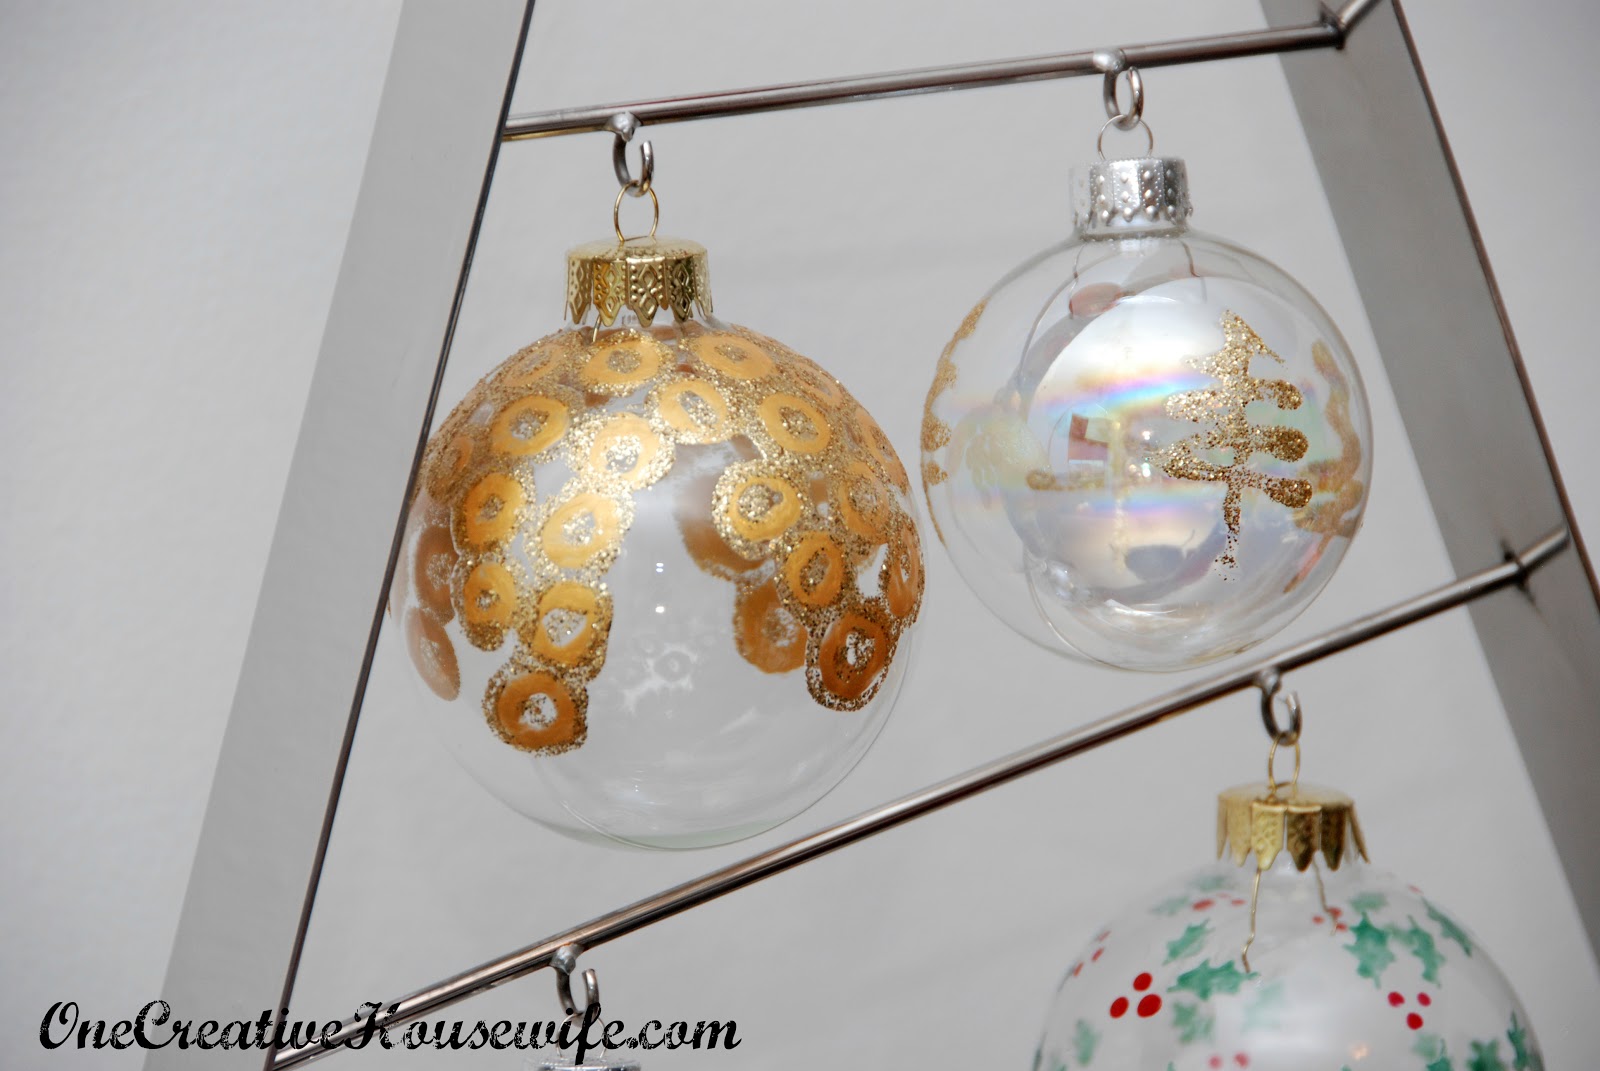 One Creative Housewife: DIY Christmas Ornaments